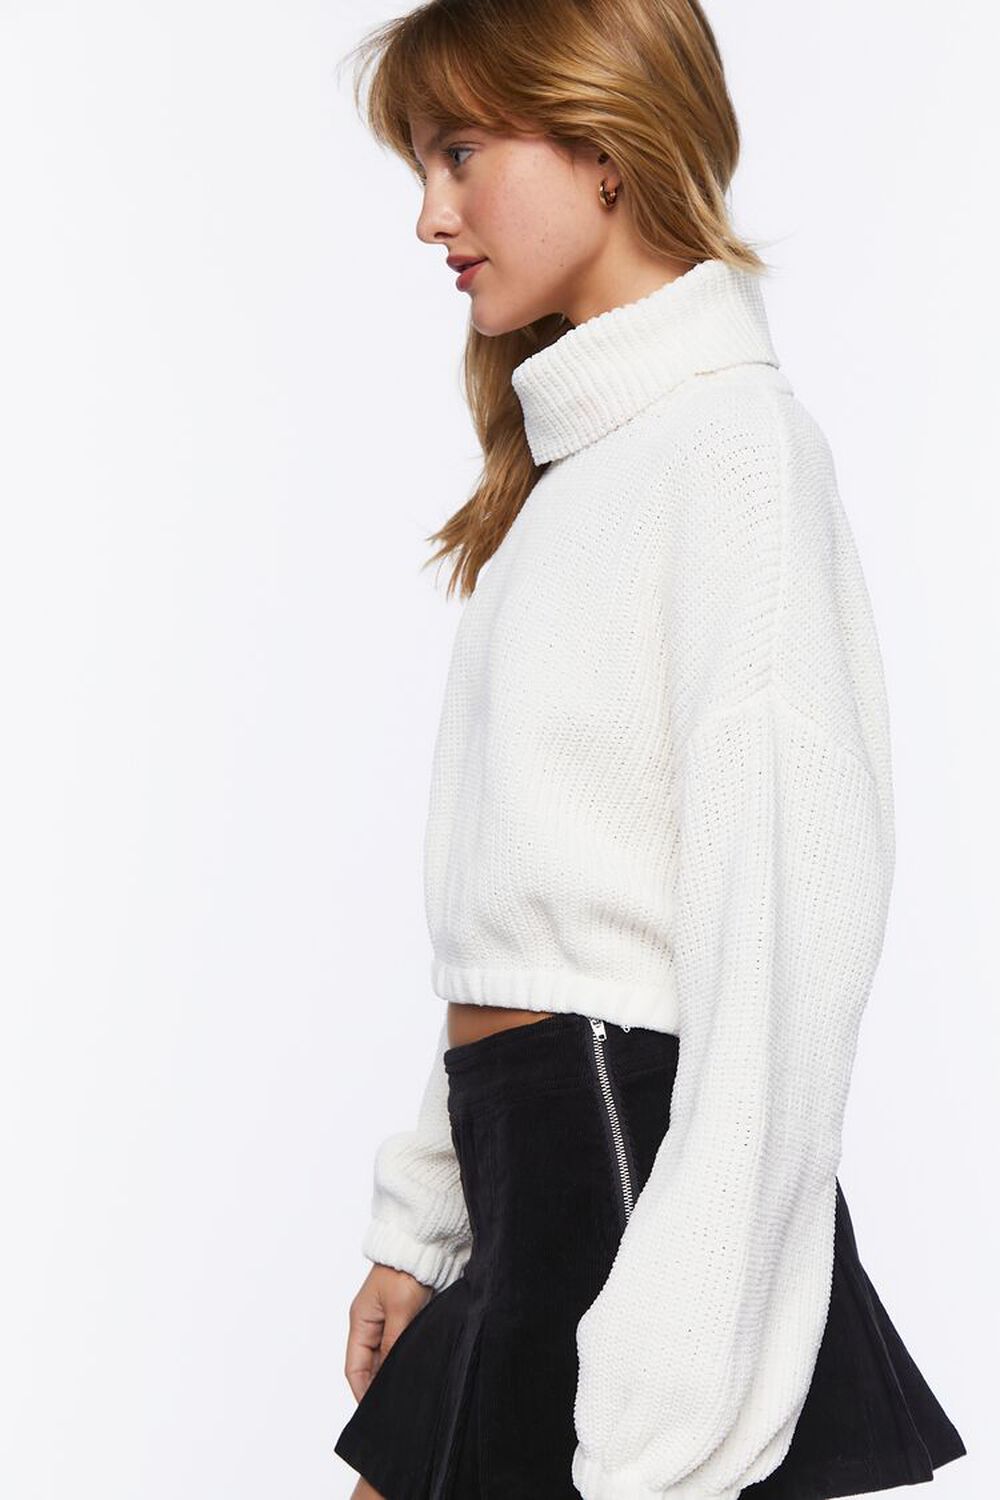 VANILLA Ribbed Turtleneck Sweater, image 2